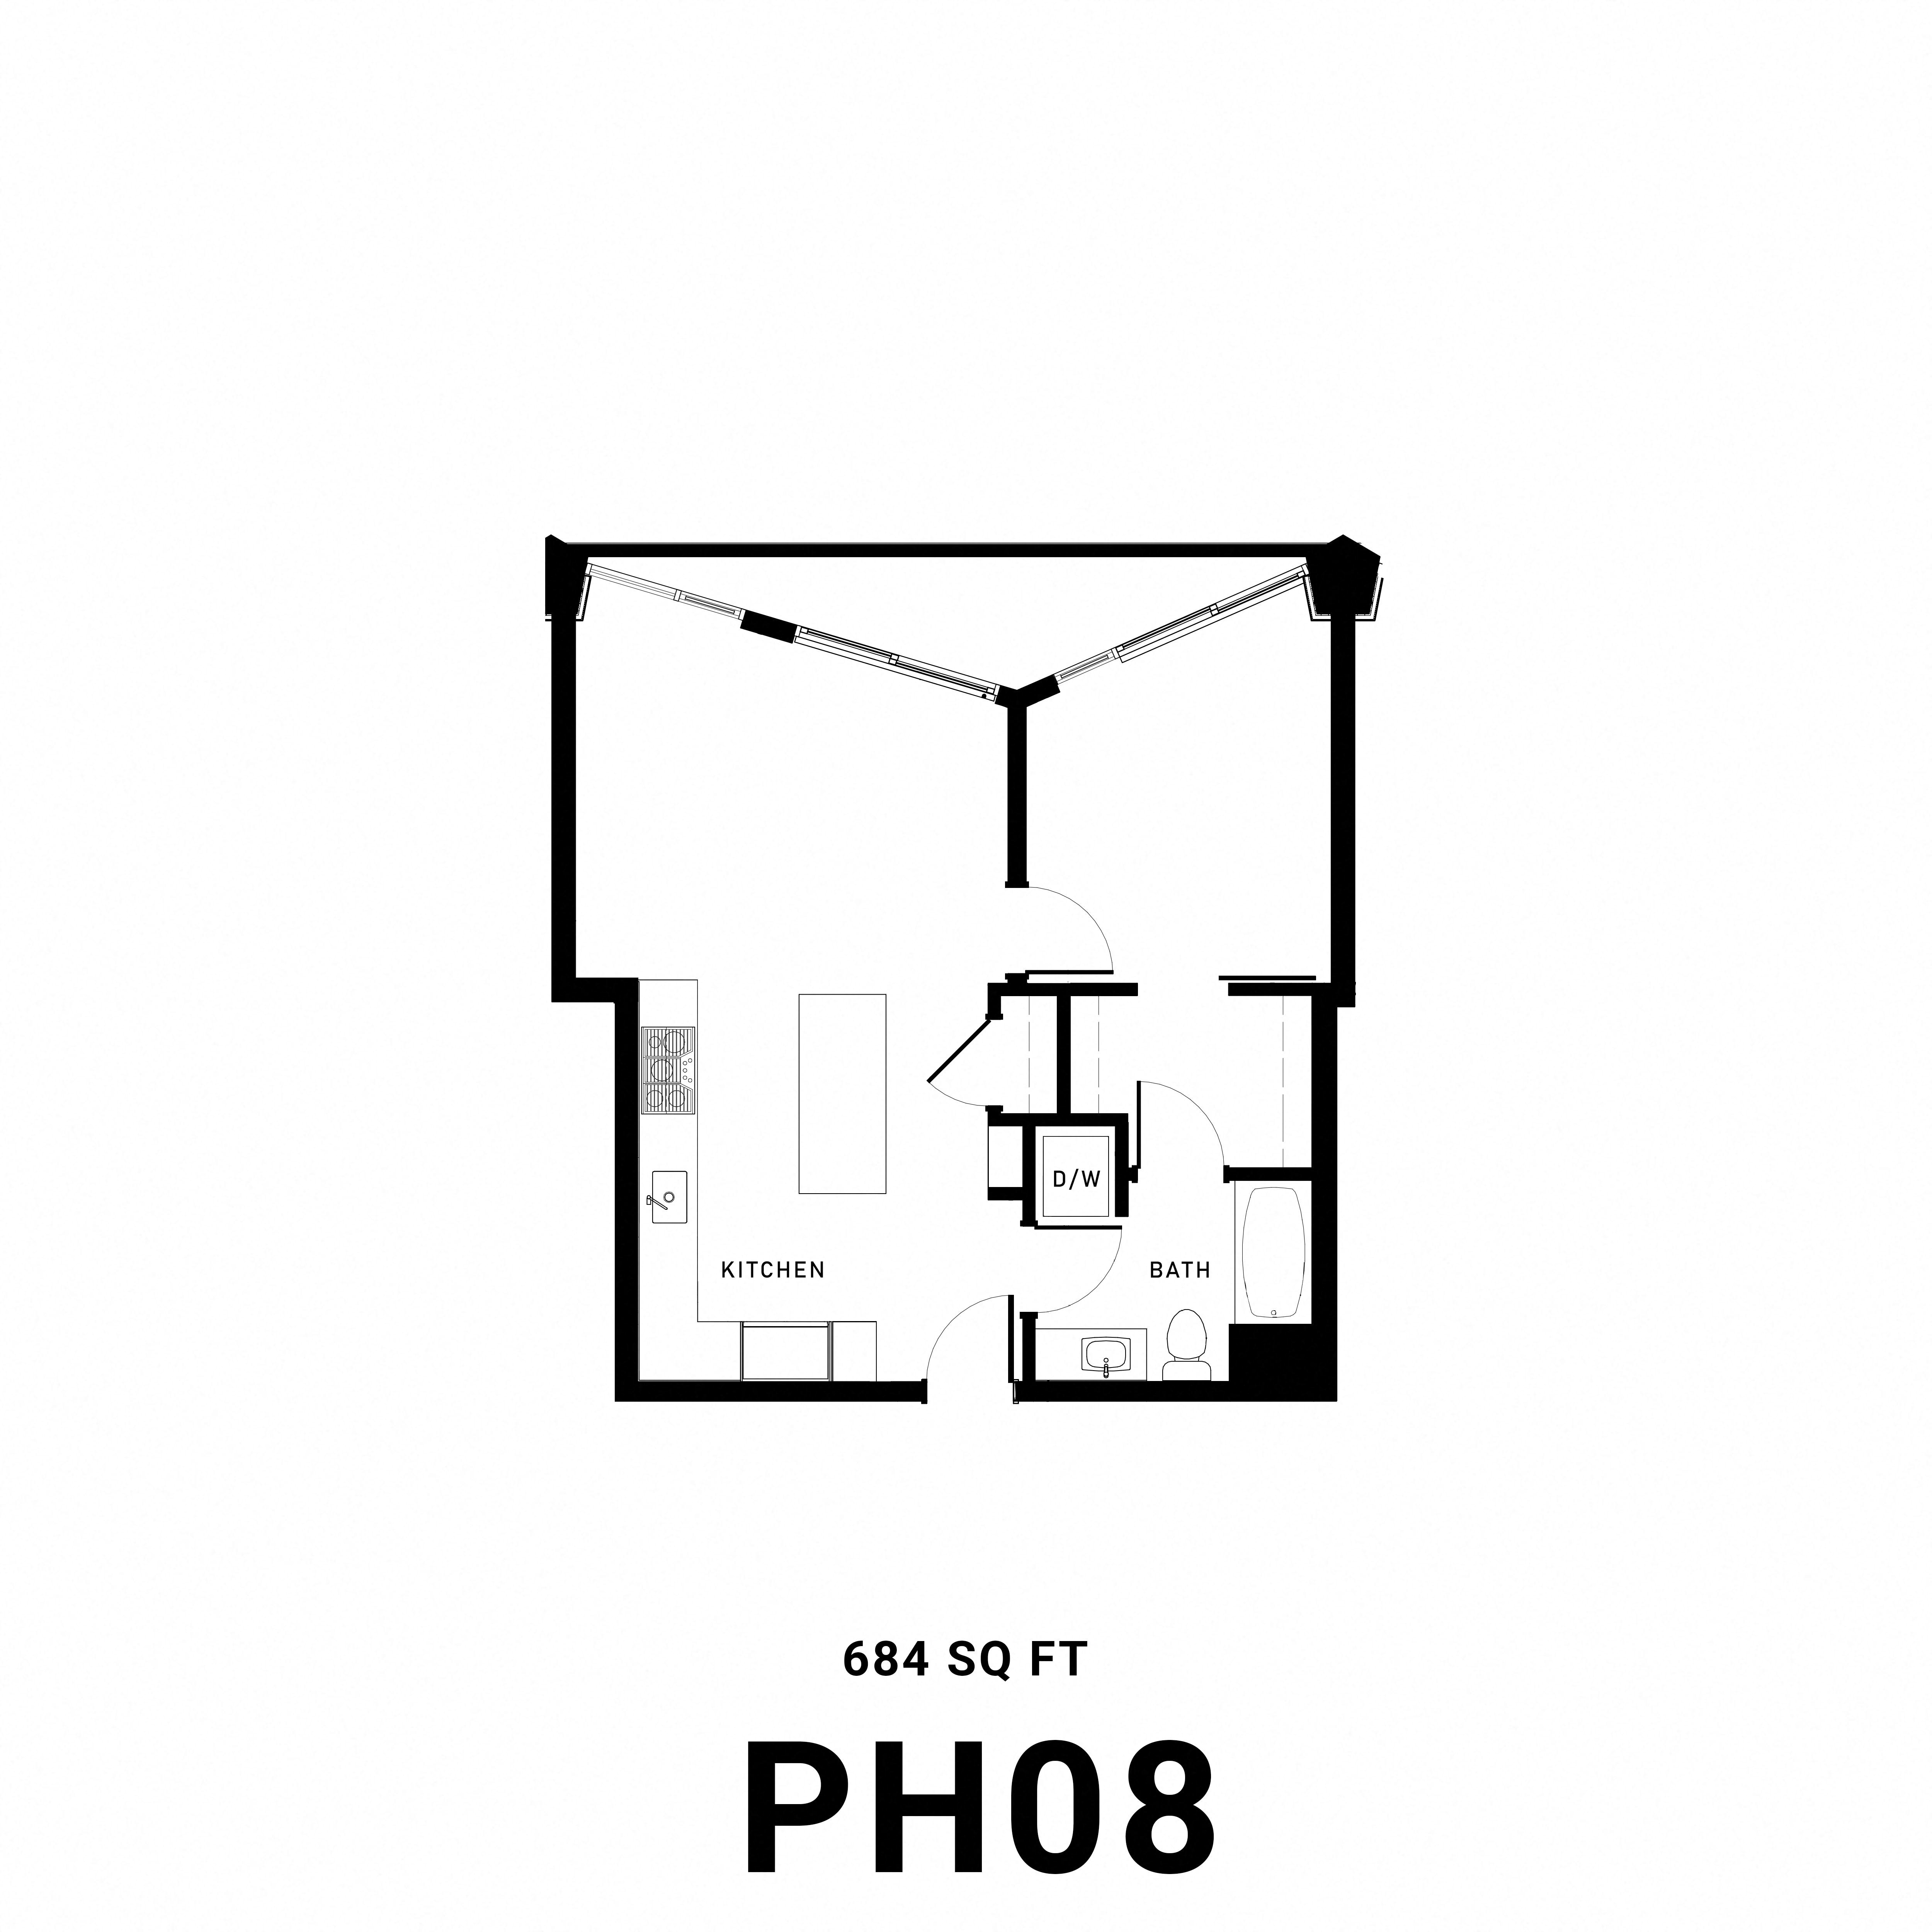 Floorplan PH08